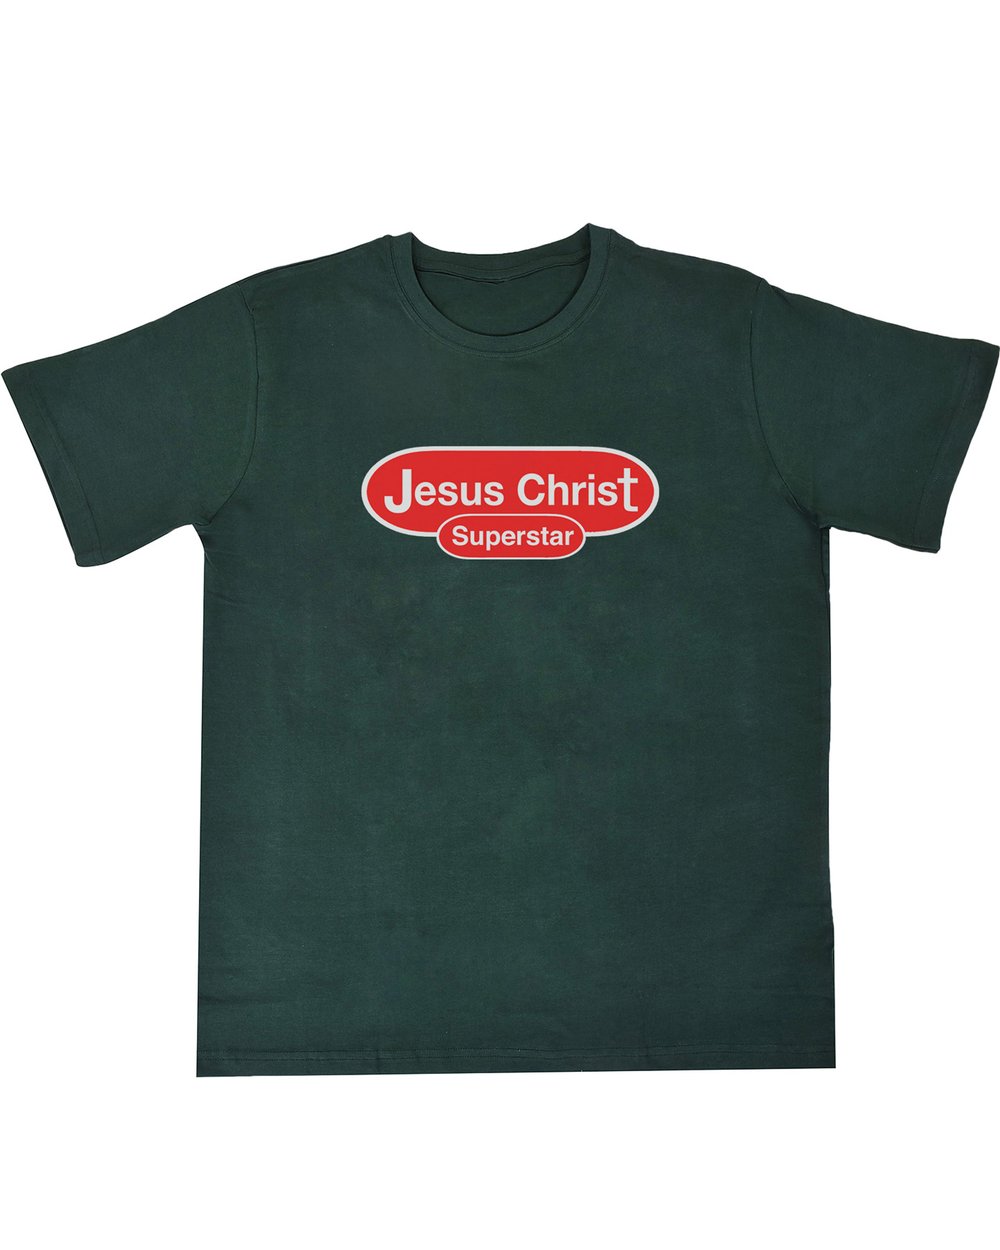 Image of JESUS CHRIST SUPERSTAR TEE - FOREST GREEN